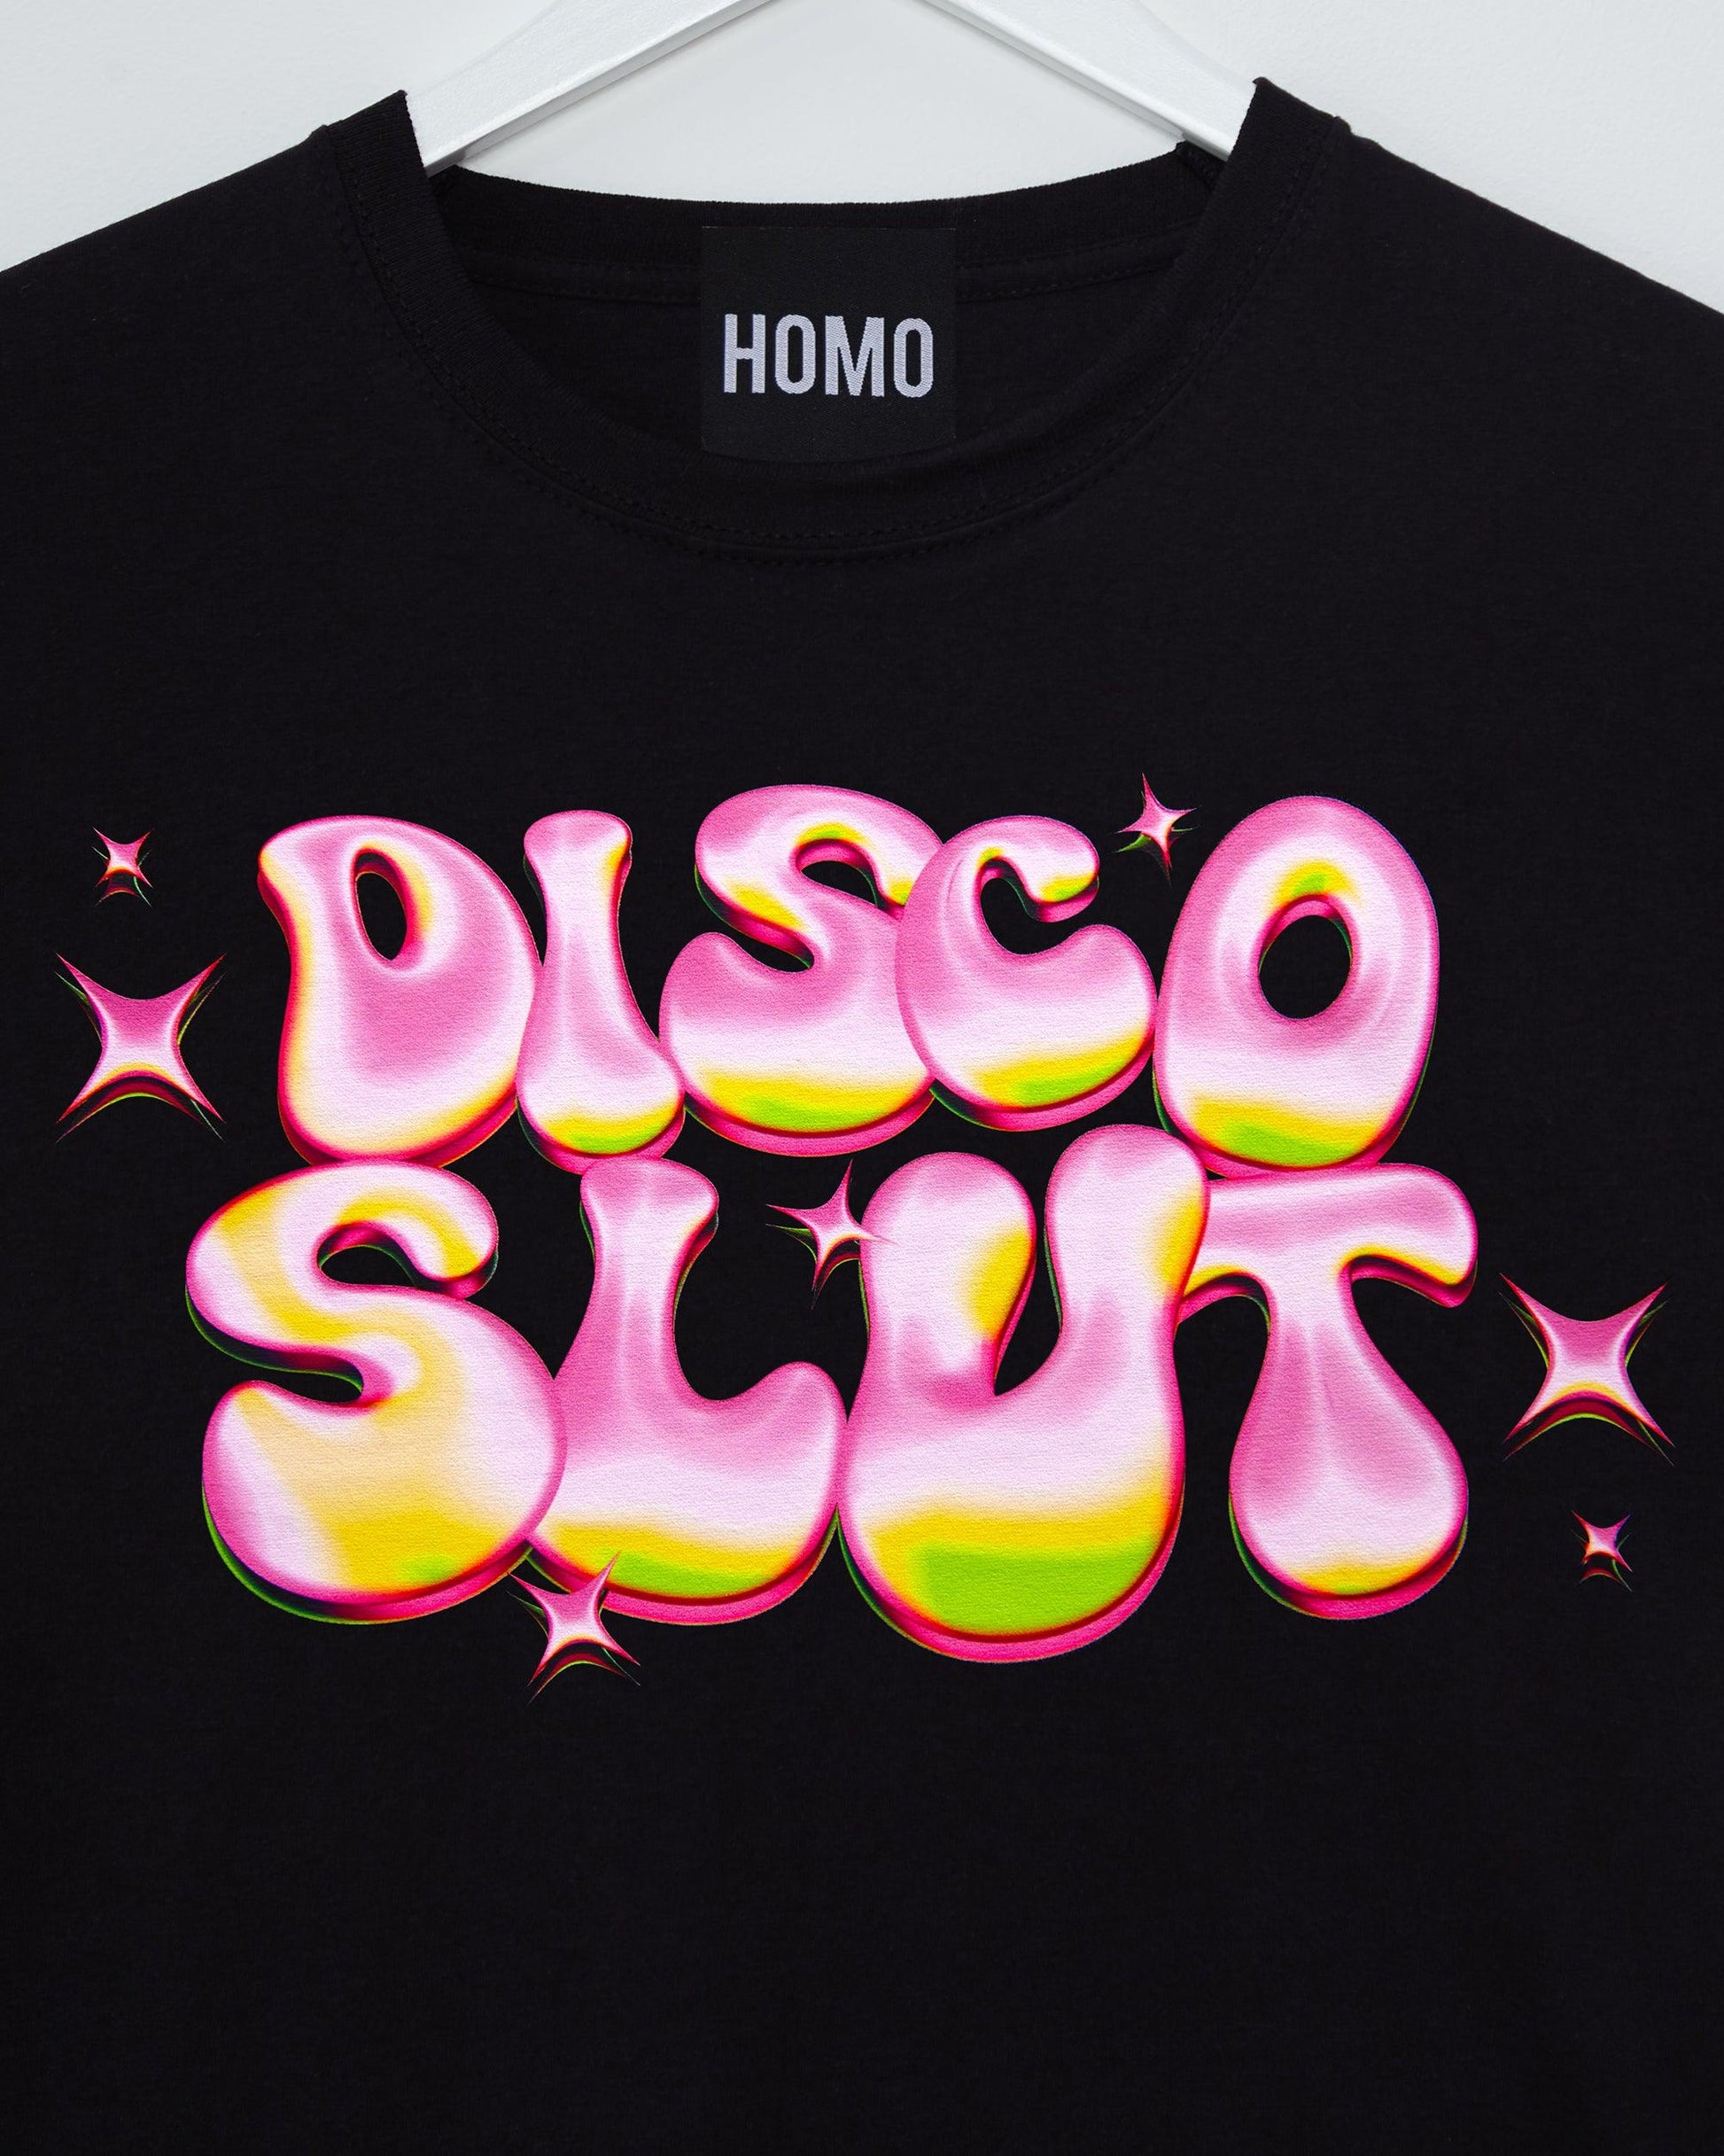 Disco slut - mens tshirt - HOMOLONDON